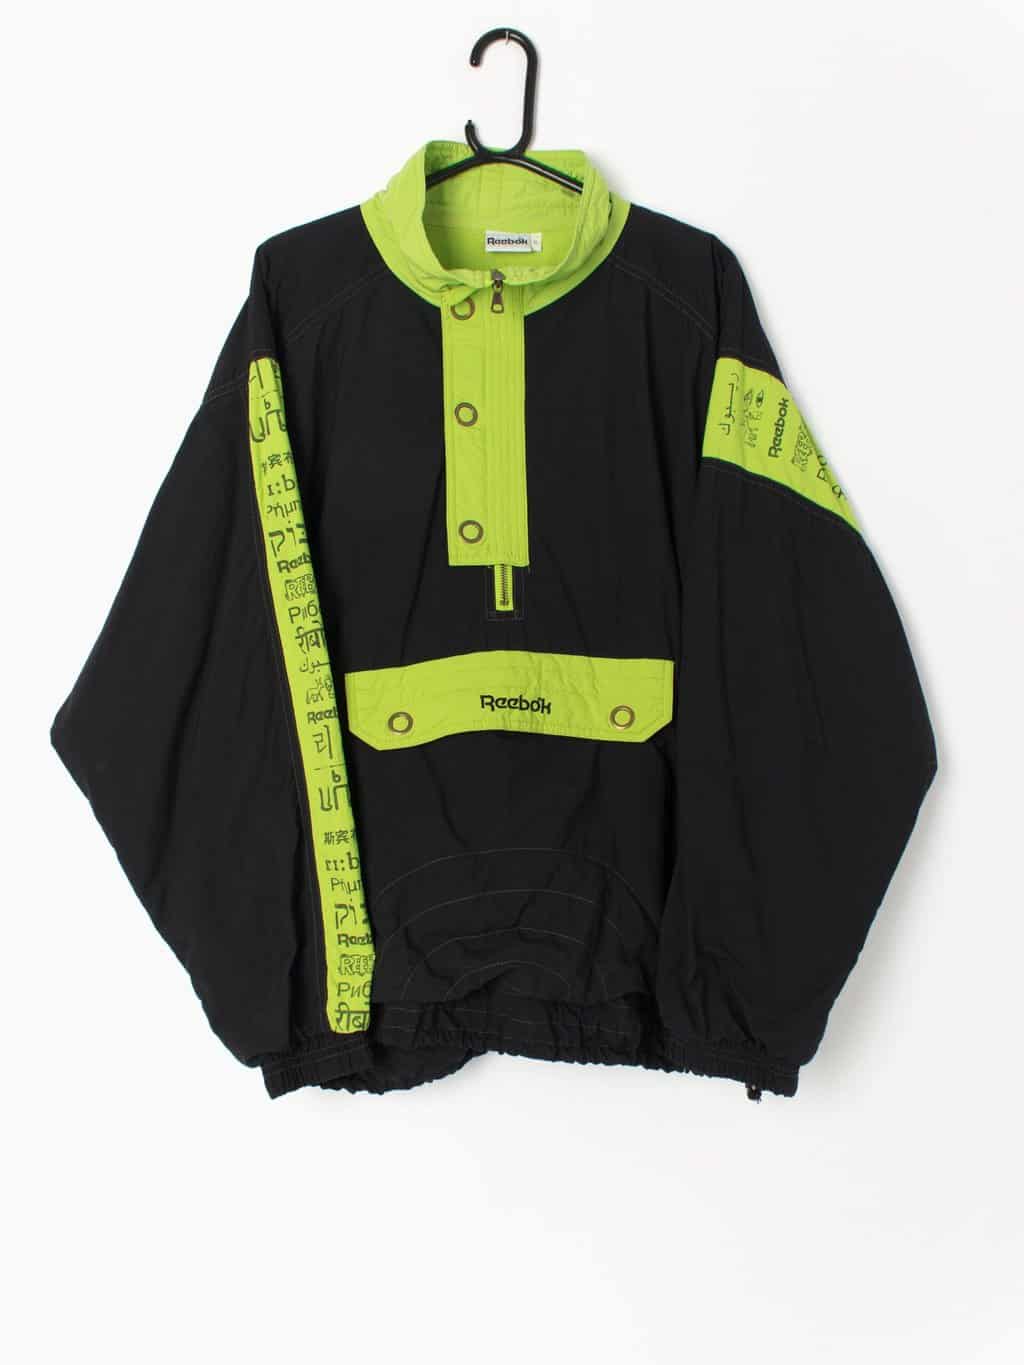 Vintage 90s Reebok track jacket windbreaker in black and bold lime green  XL St Cyr Vintage